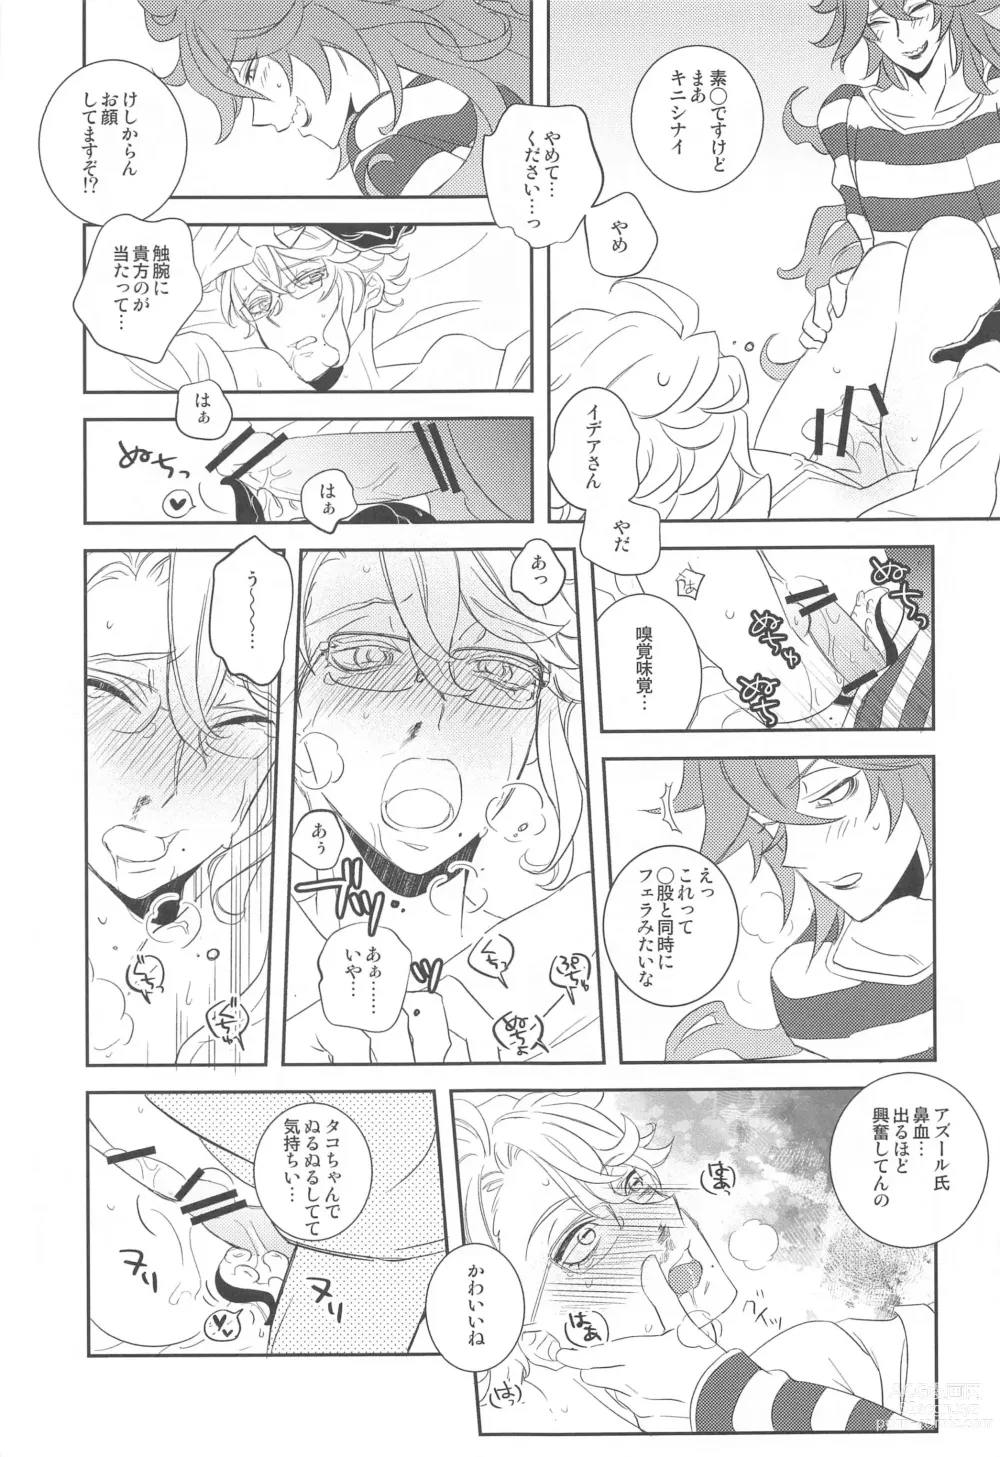 Page 22 of doujinshi Tail!